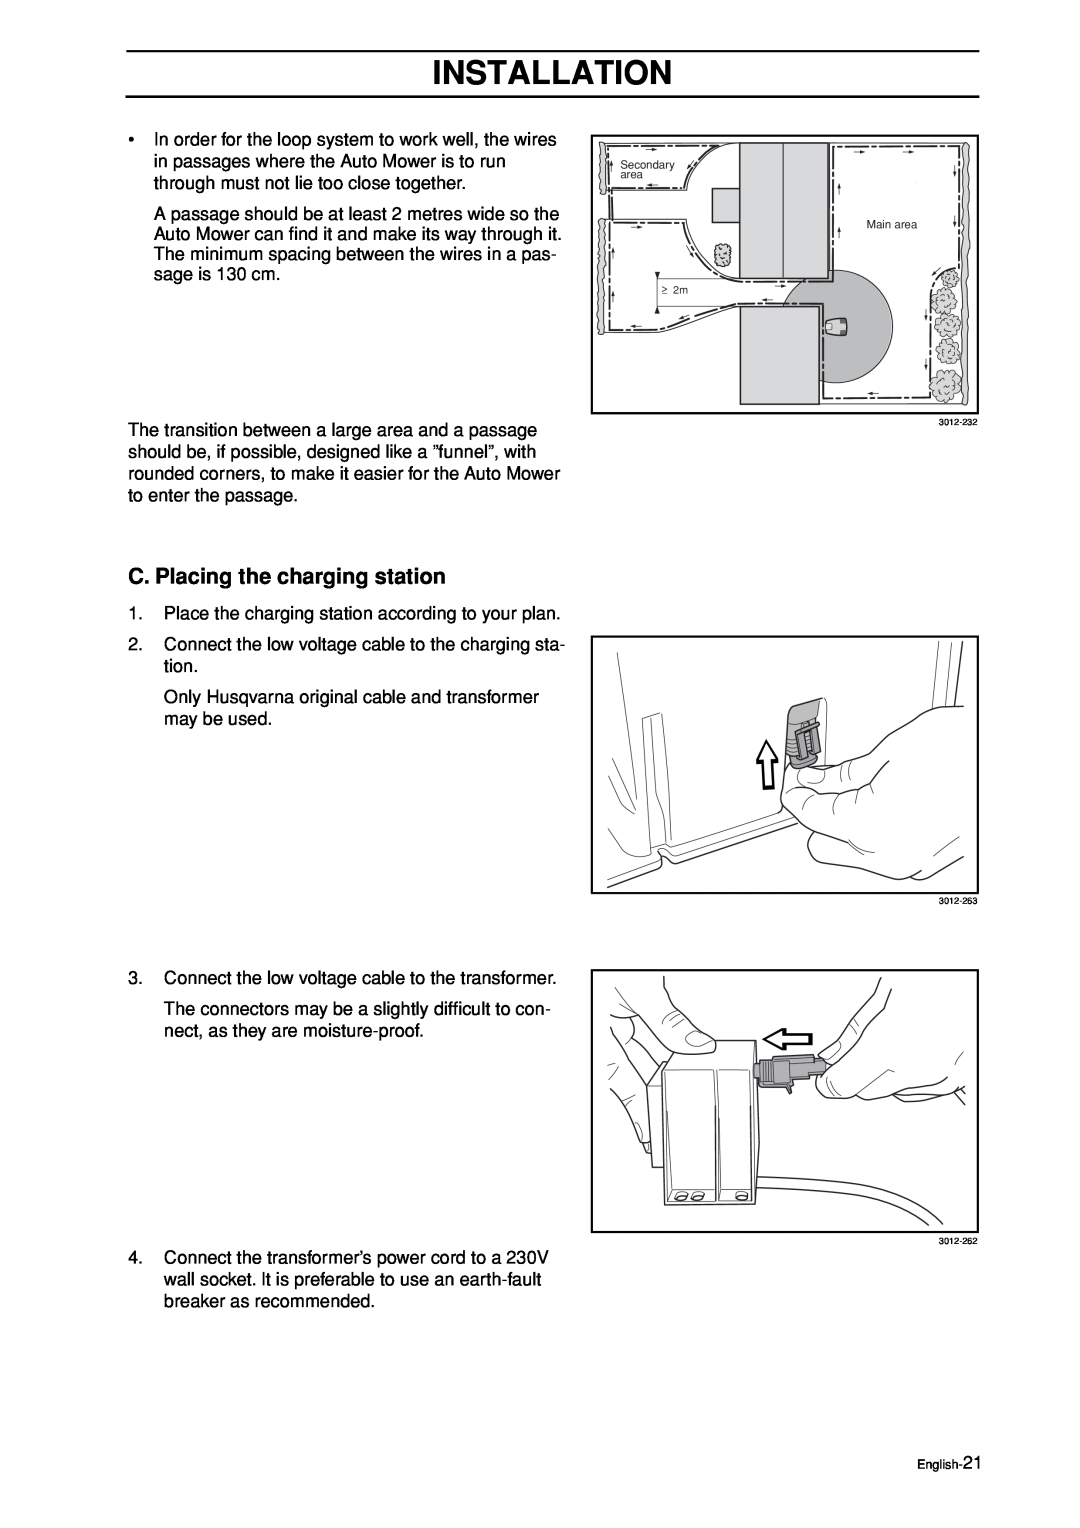 Husqvarna Auto Mower manual C. Placing the charging station, Installation 